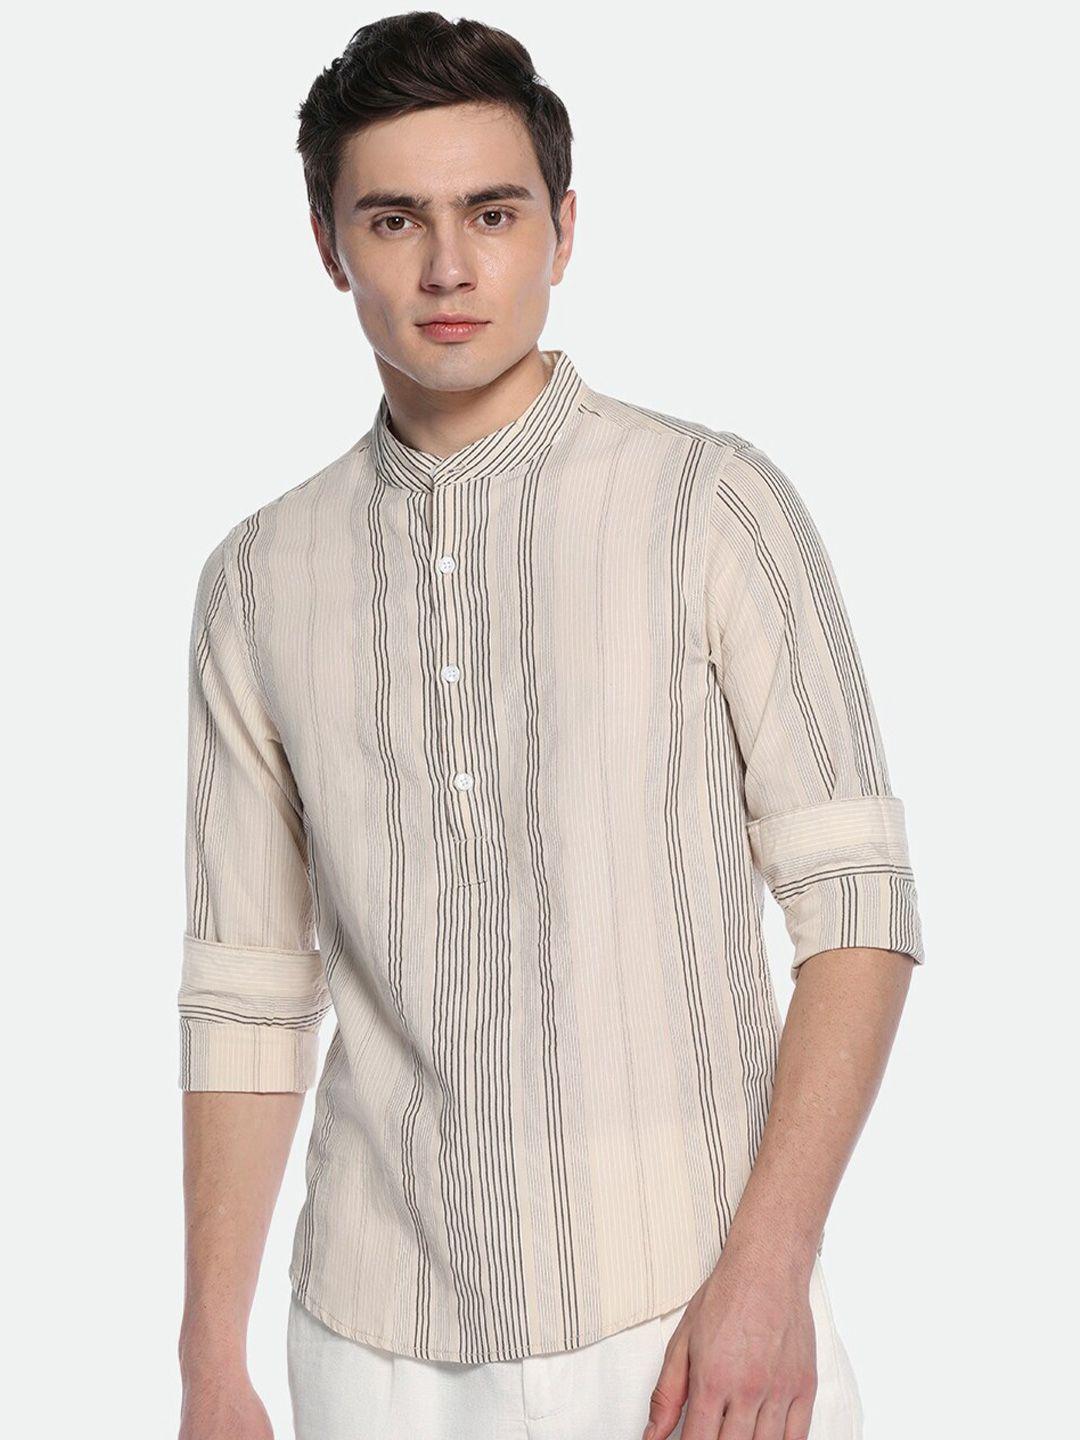 dennis lingo khaki comfort cotton mandarin collar slim fit opaque striped casual shirt